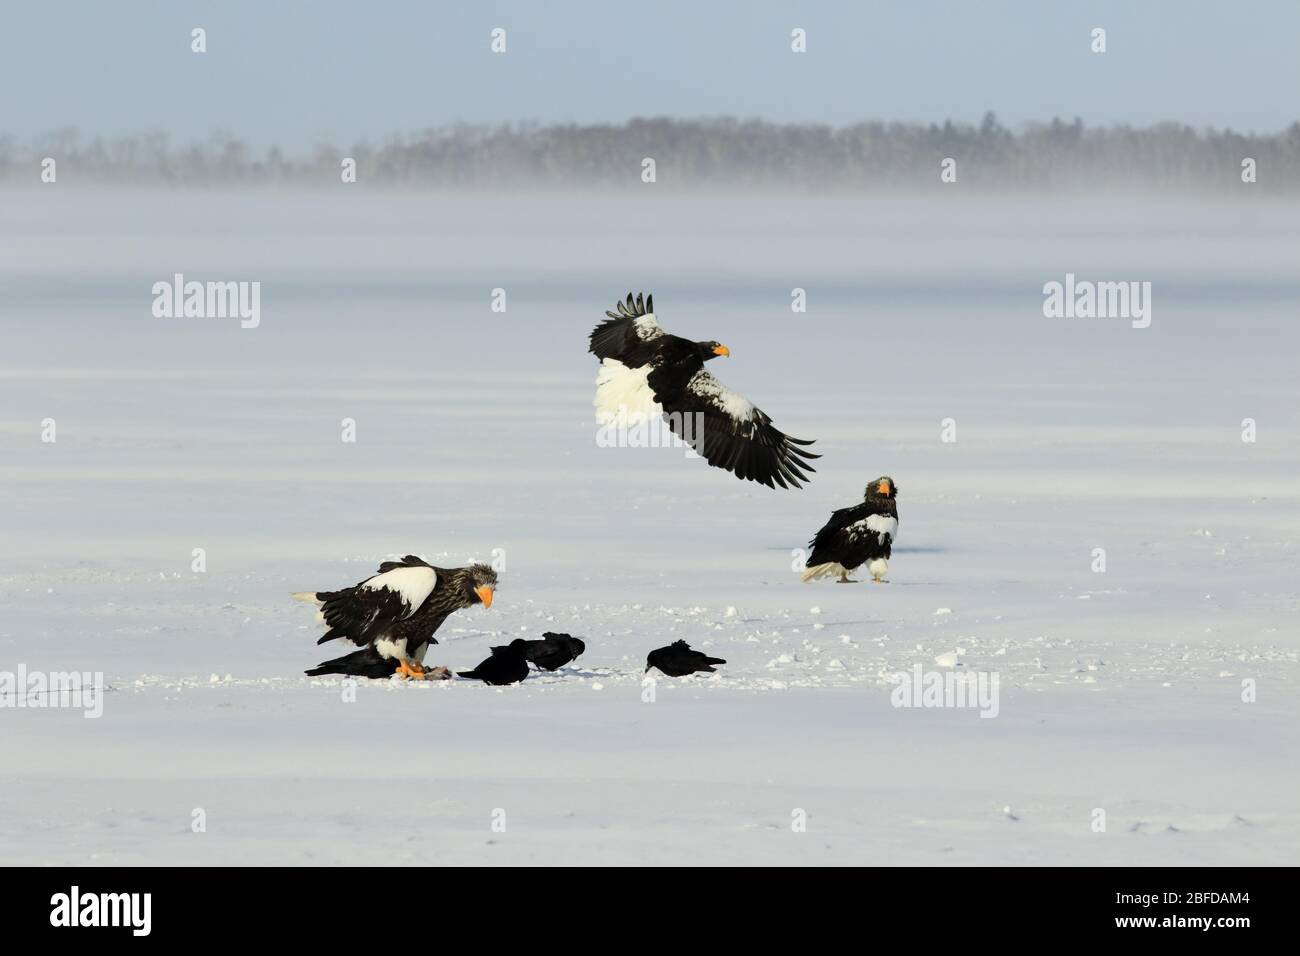 Steller's sea eagle in Hokkaido Frozen lake Stock Photo